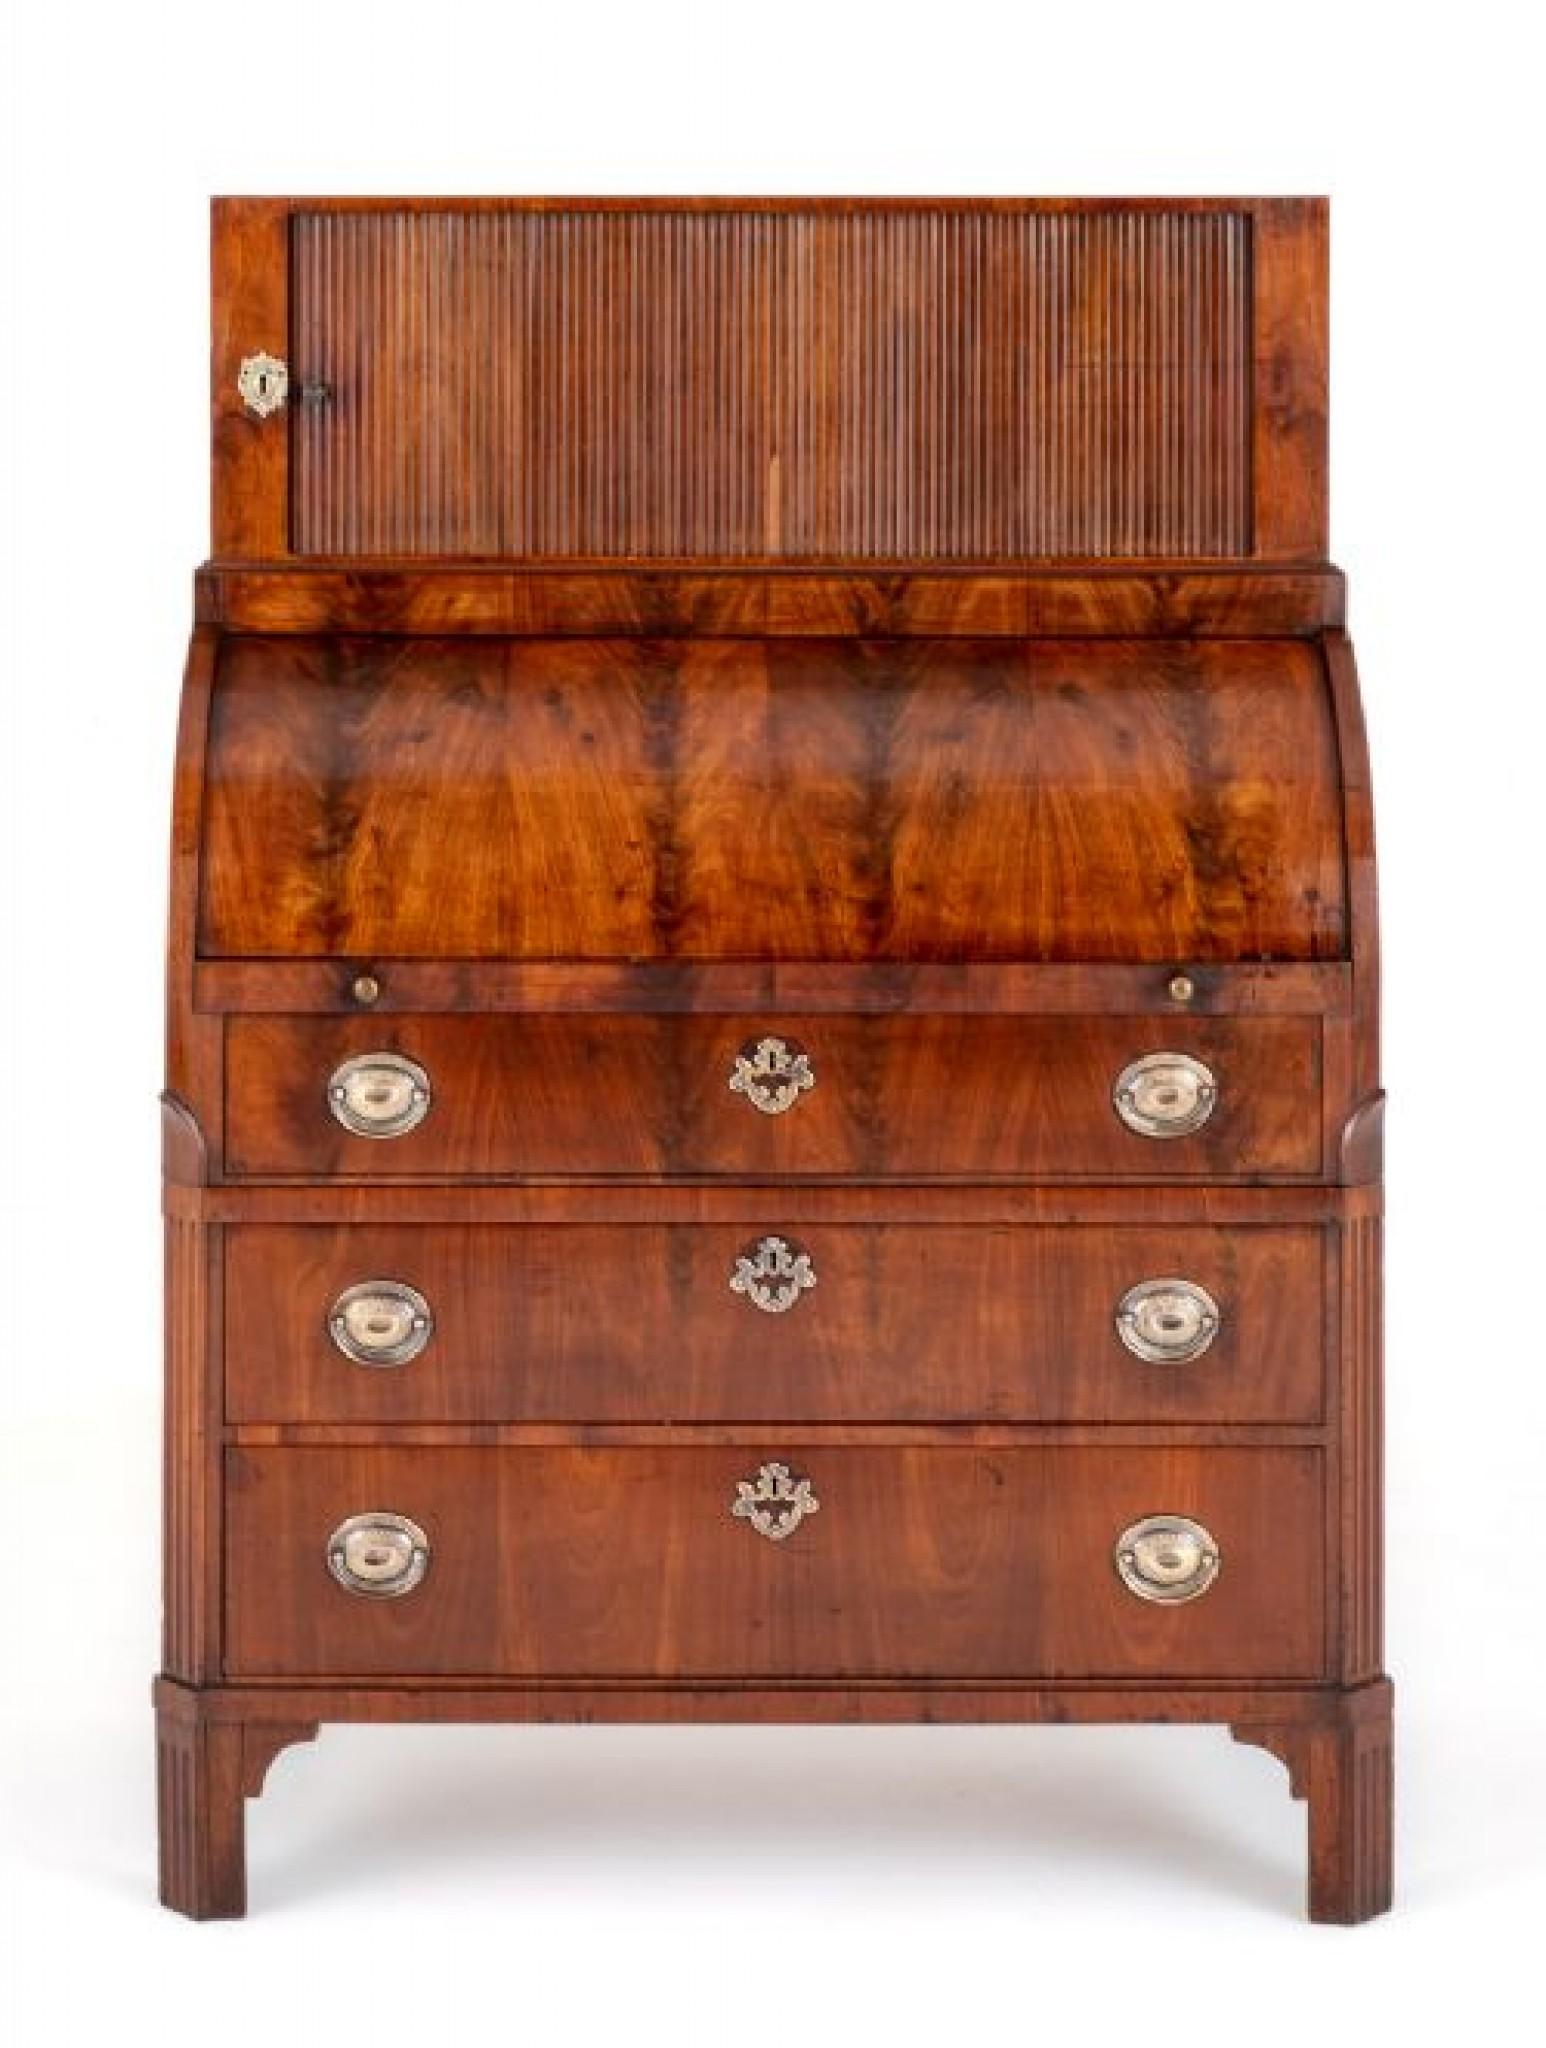 Regency Cylinder Desk Mahogany Furniture, 19th Century For Sale 8